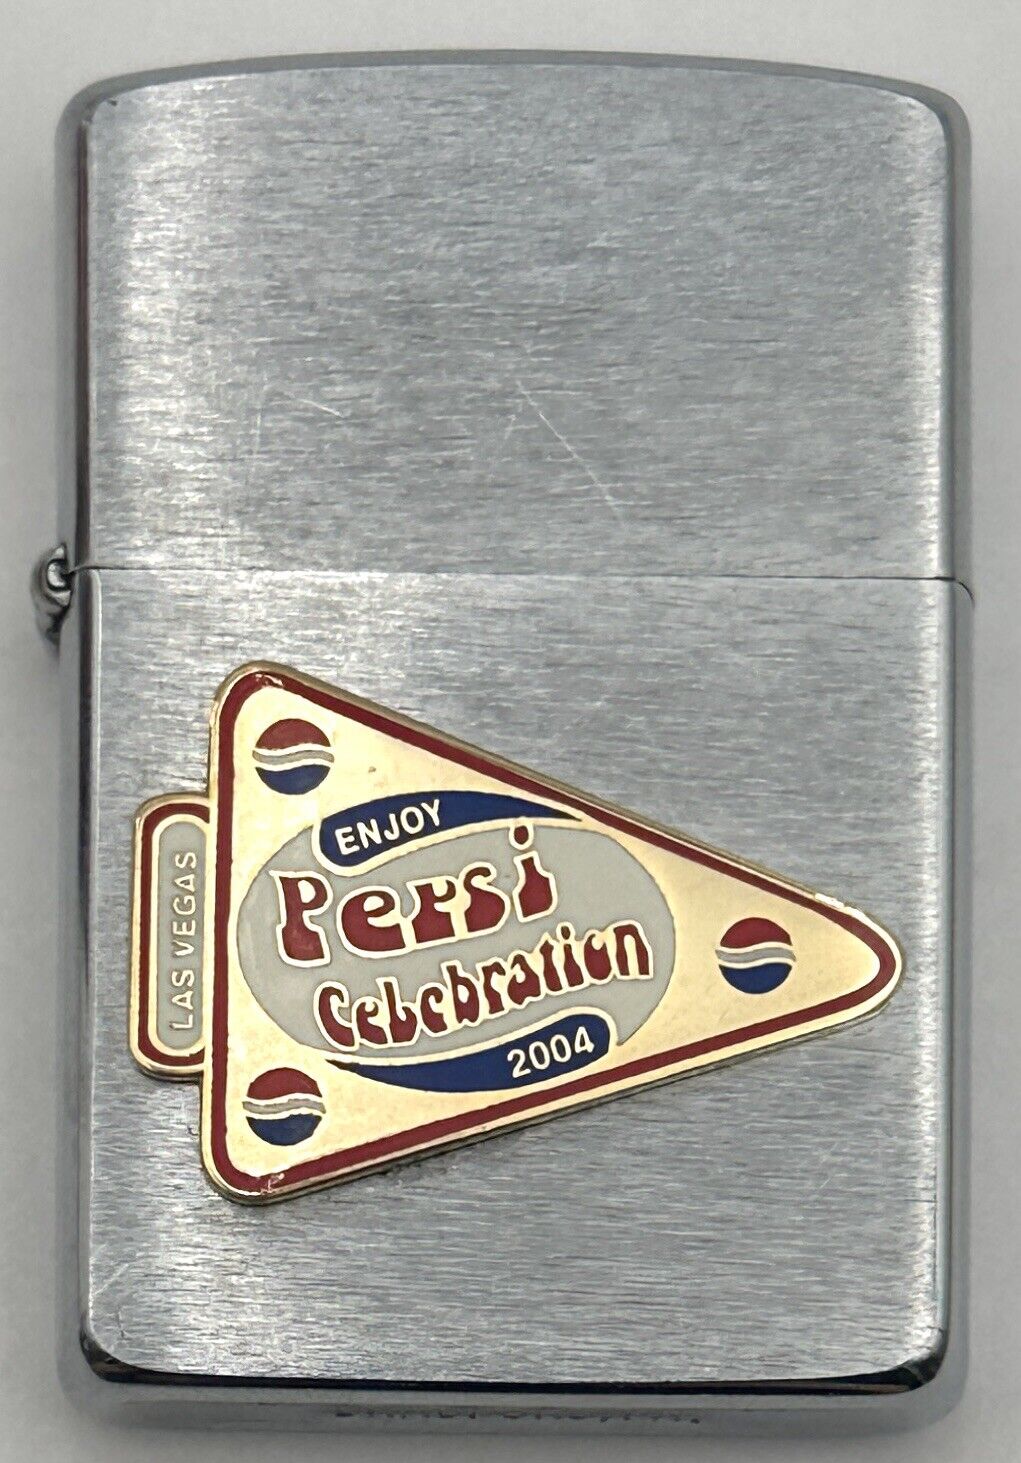 Pepsi Celebration 2004 Las Vegas Zippo Lighter 1988